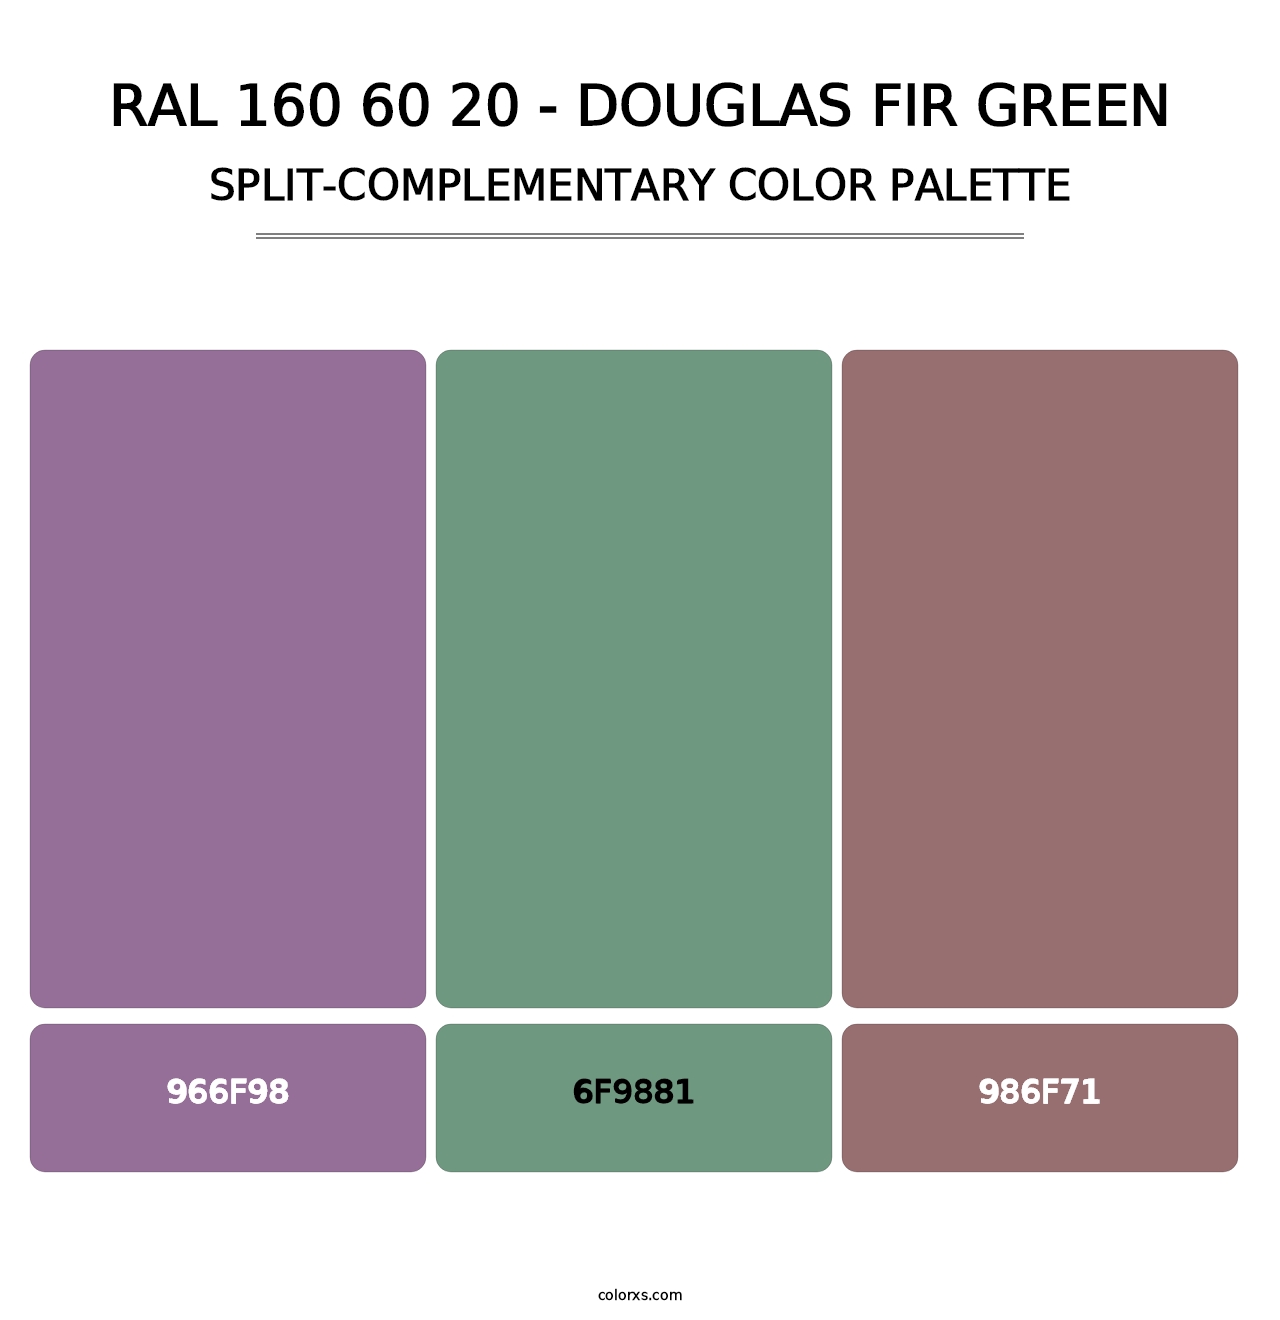 RAL 160 60 20 - Douglas Fir Green - Split-Complementary Color Palette